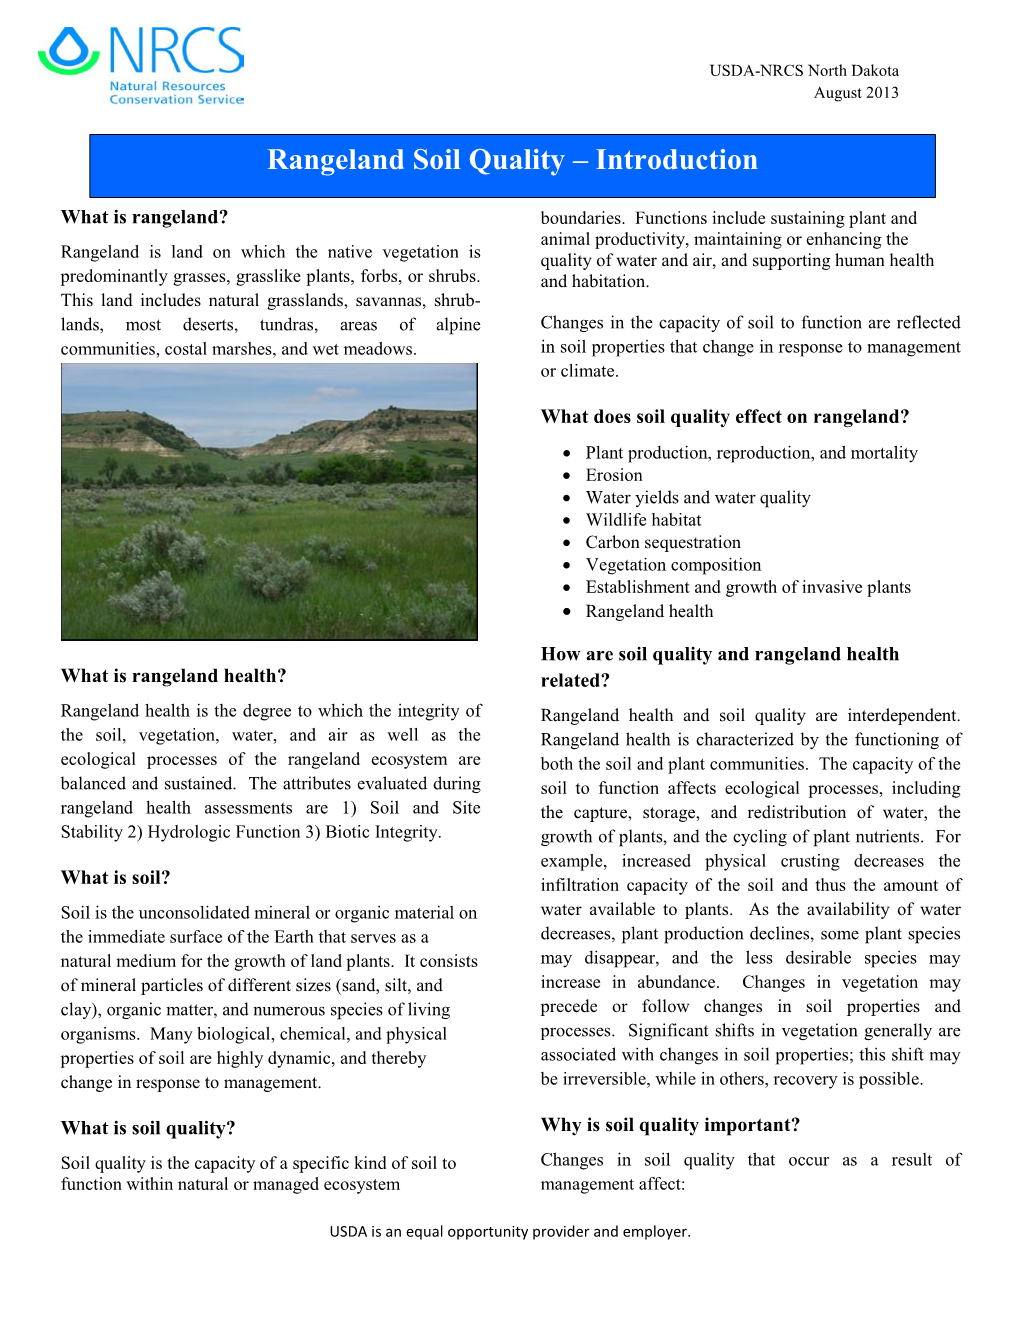 Rangeland Soil Quality – Introduction